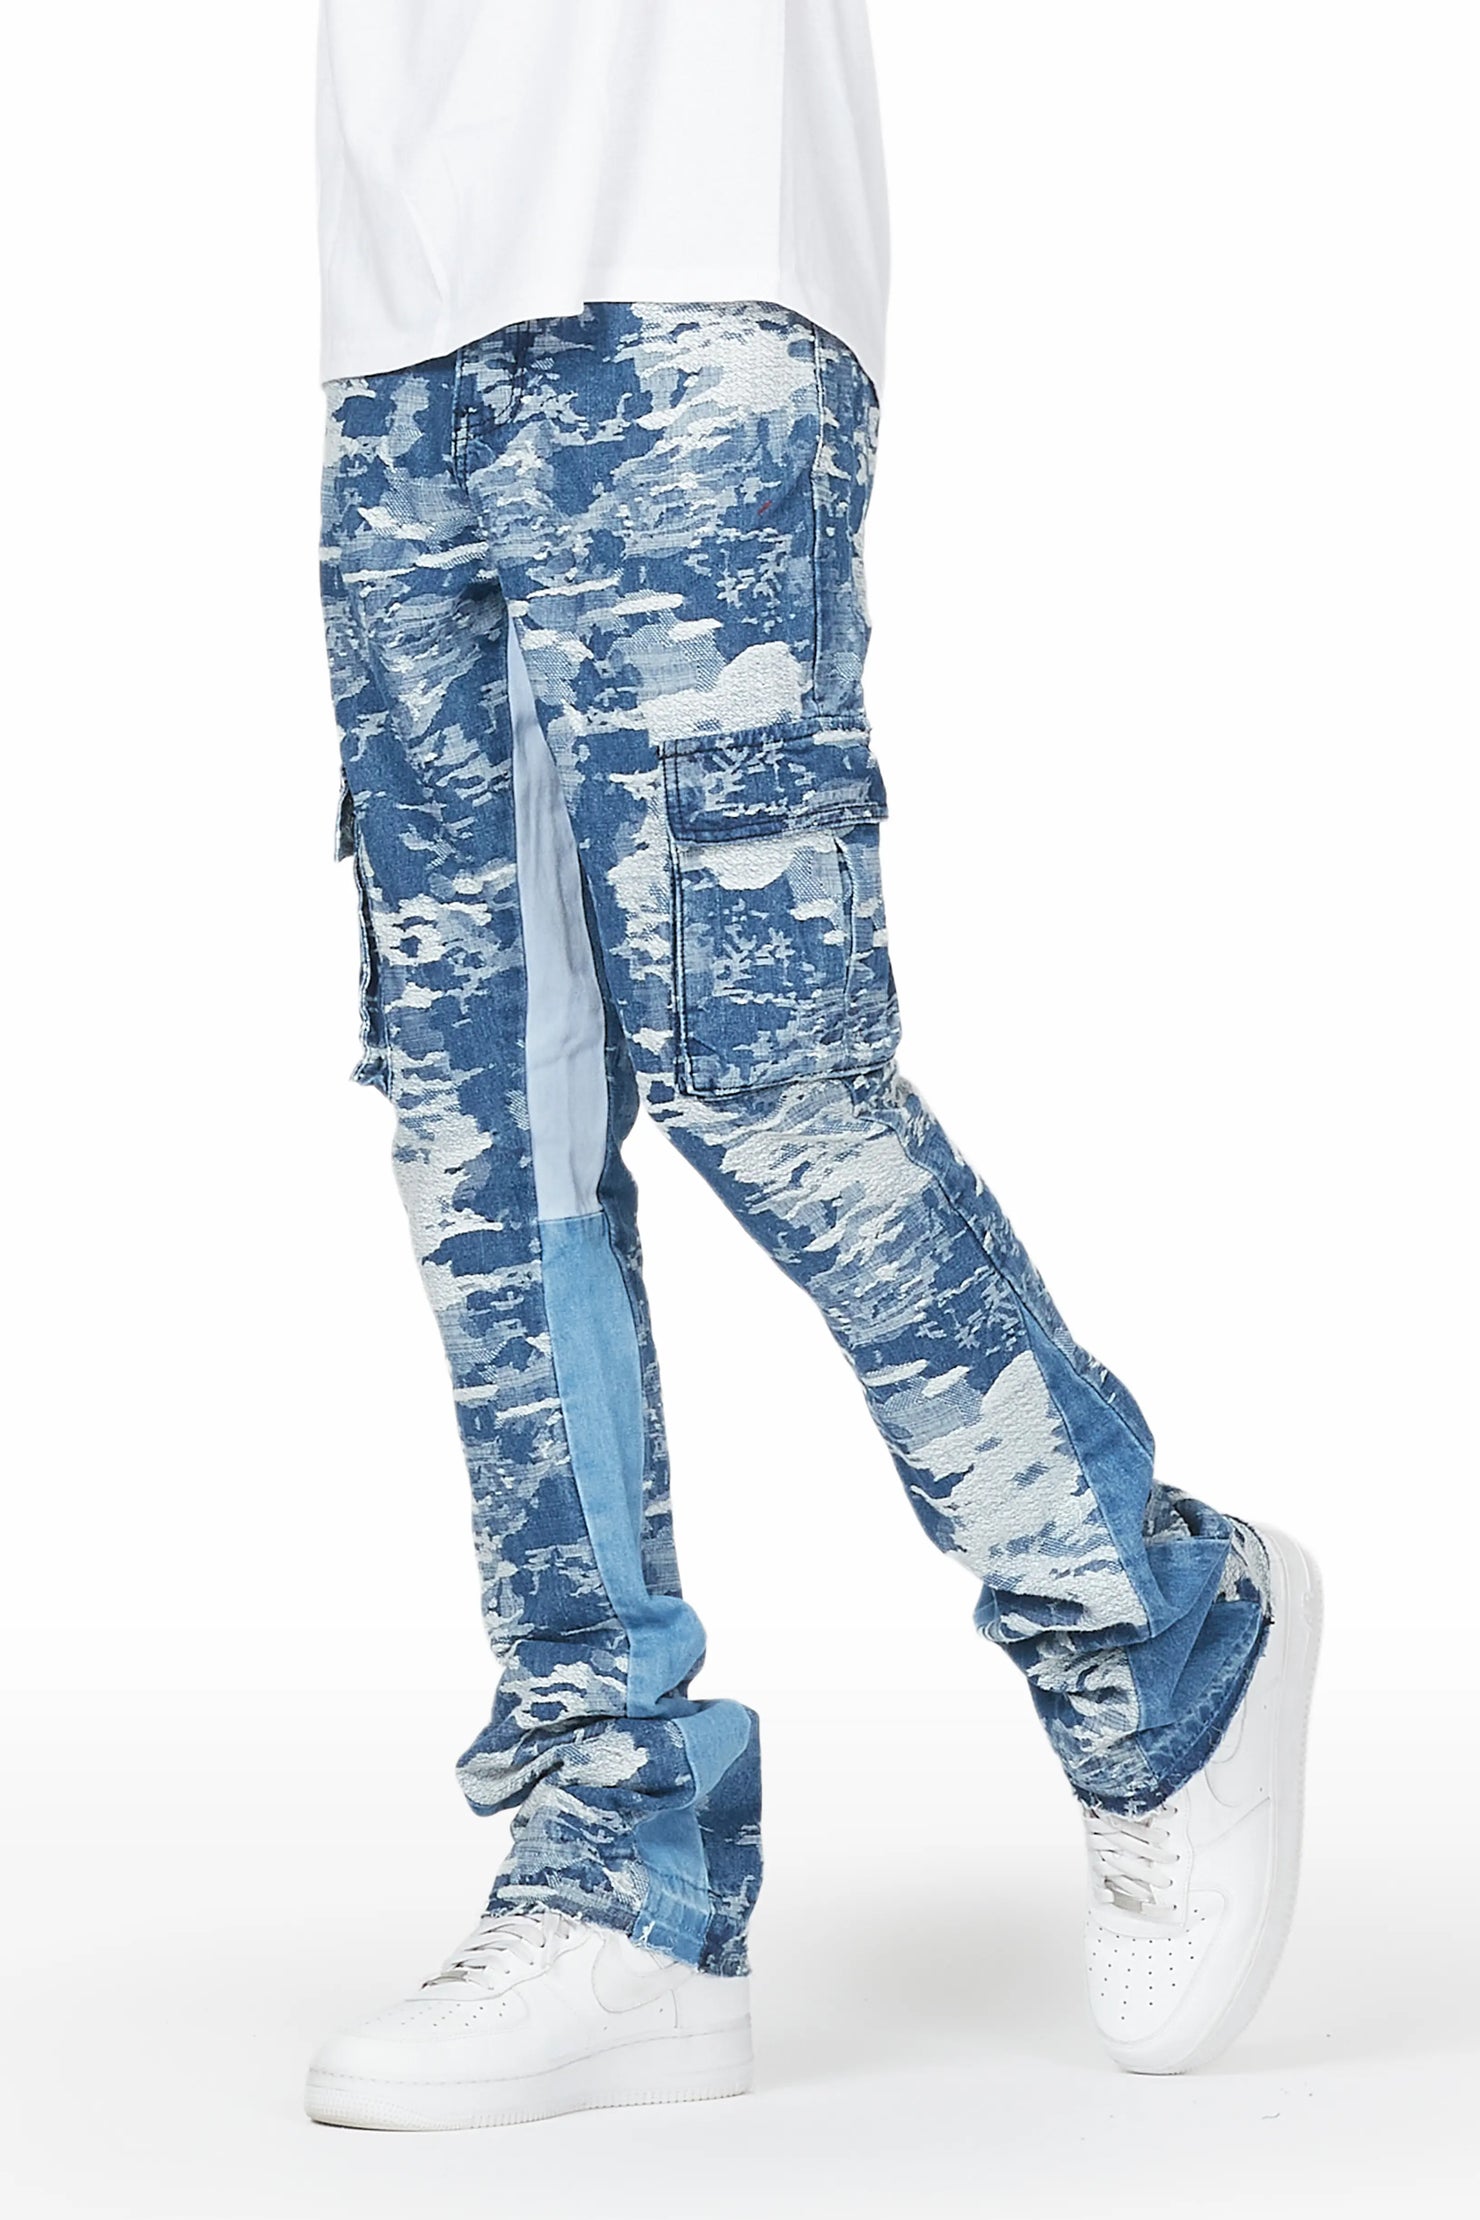 Jaxson Blue Stacked Jean